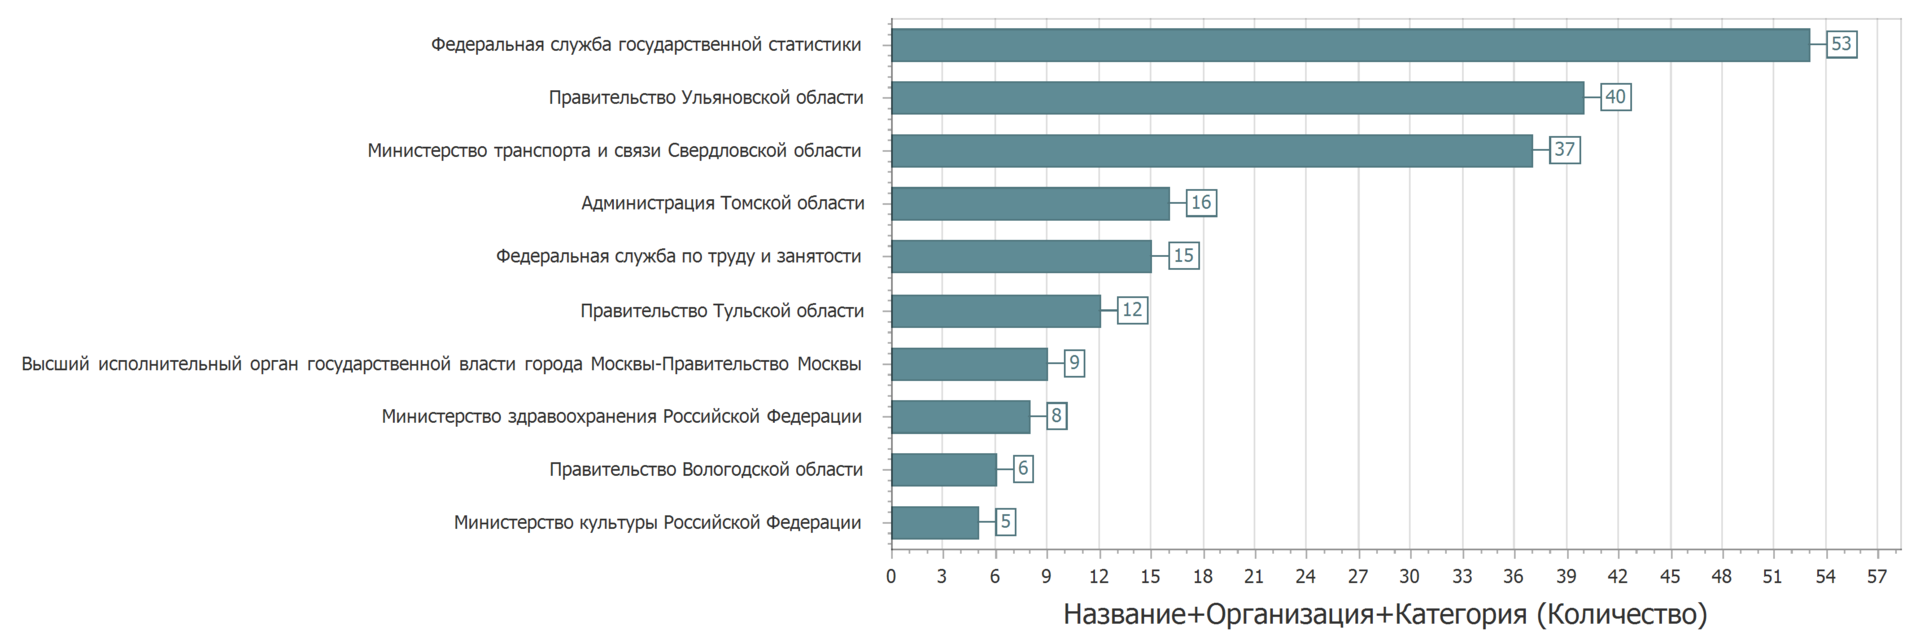 Анализ наборов данных с портала открытых данных data.gov.ru - 7